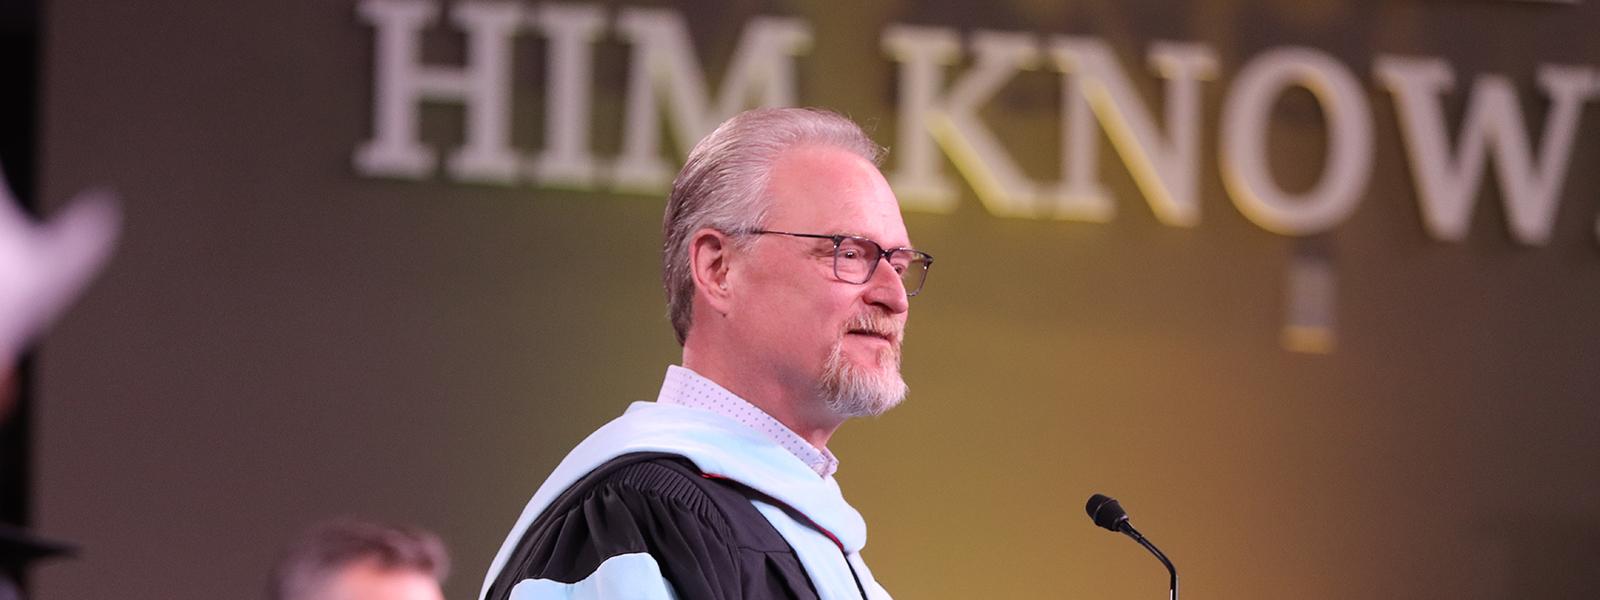 Columbia International University has named Rick Christman acting president.